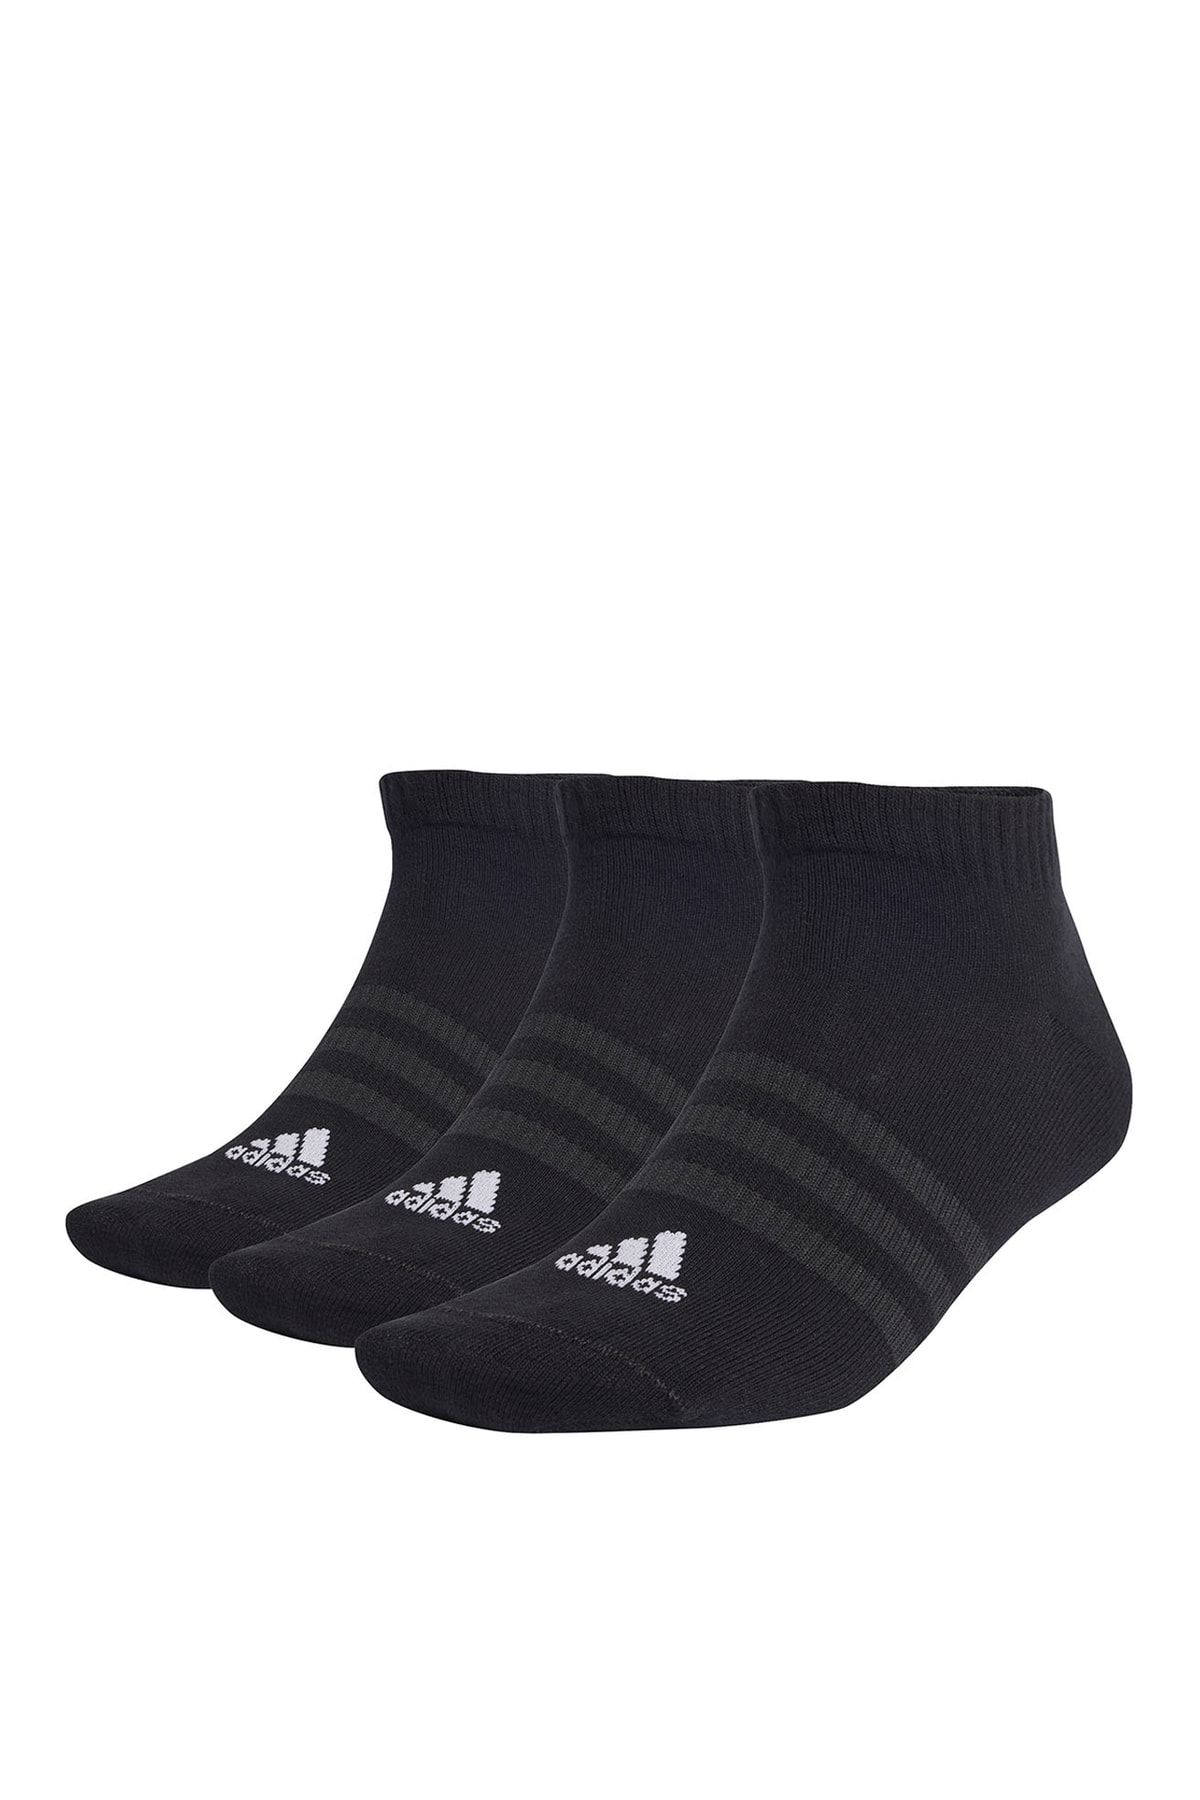 adidas جوراب ورزشی یونیسکس سیاه - سفید Ic1336 T Spw Low 3p